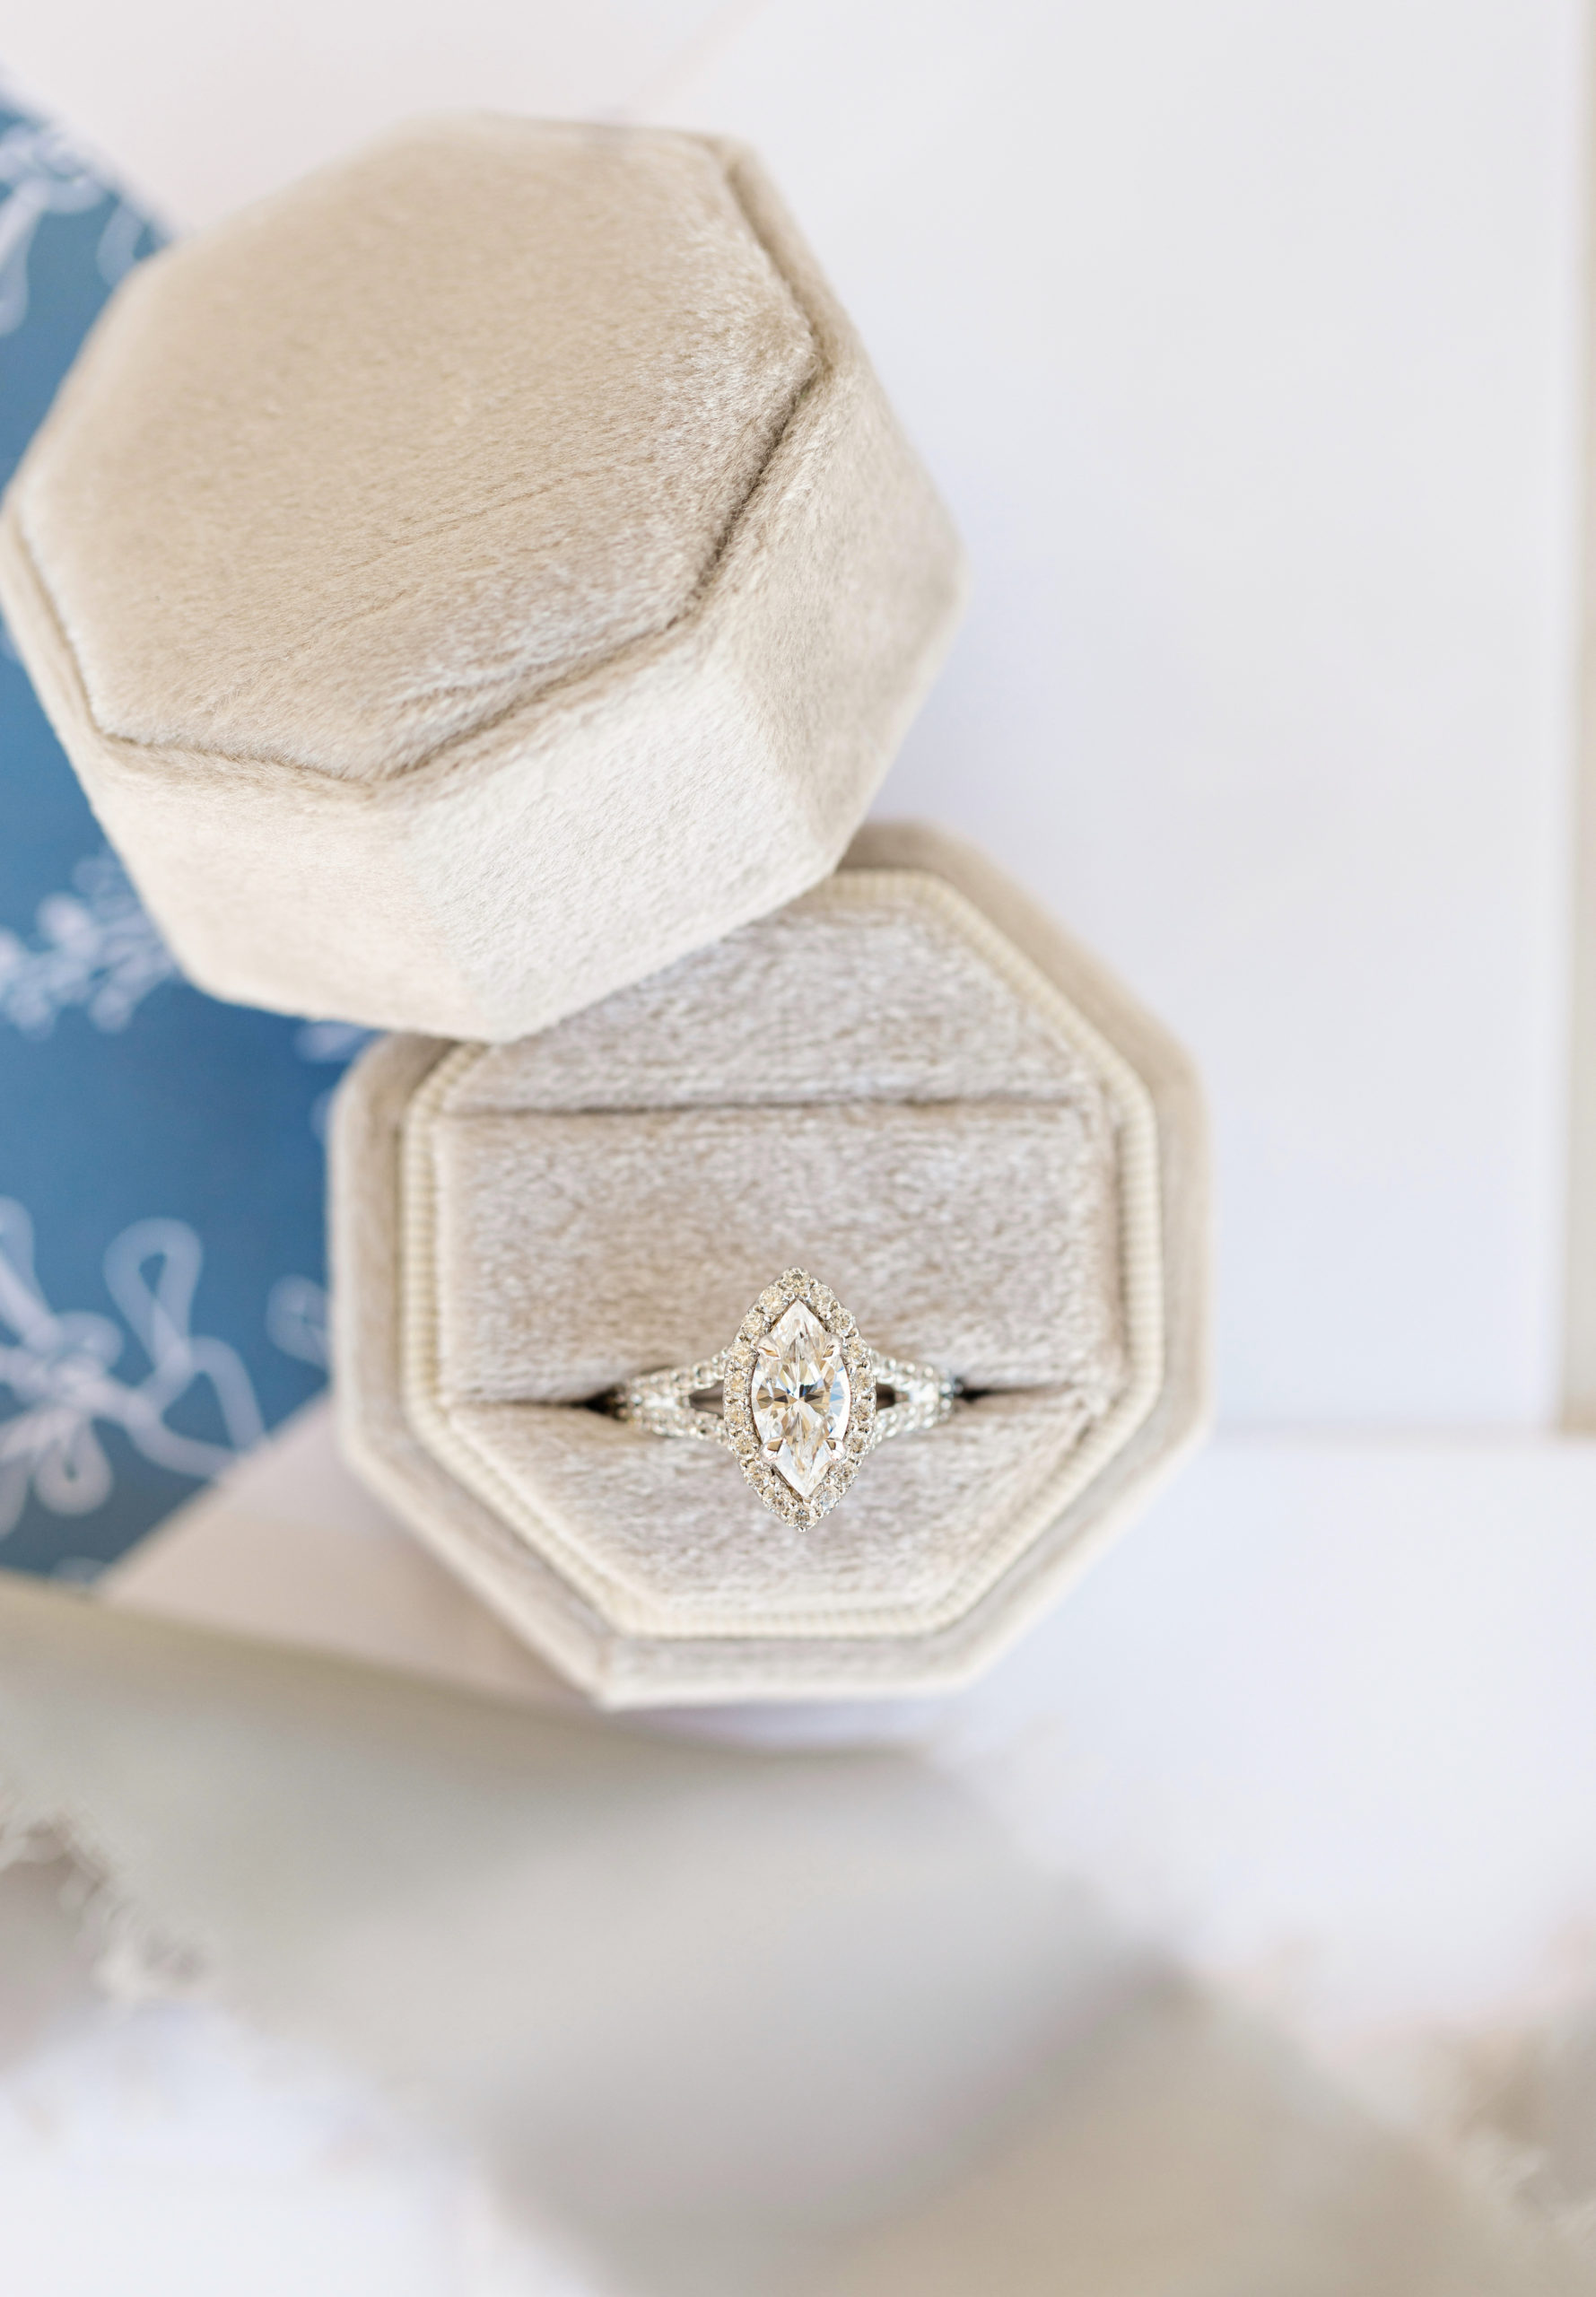 Close-up shot of wedding ring inside beige box